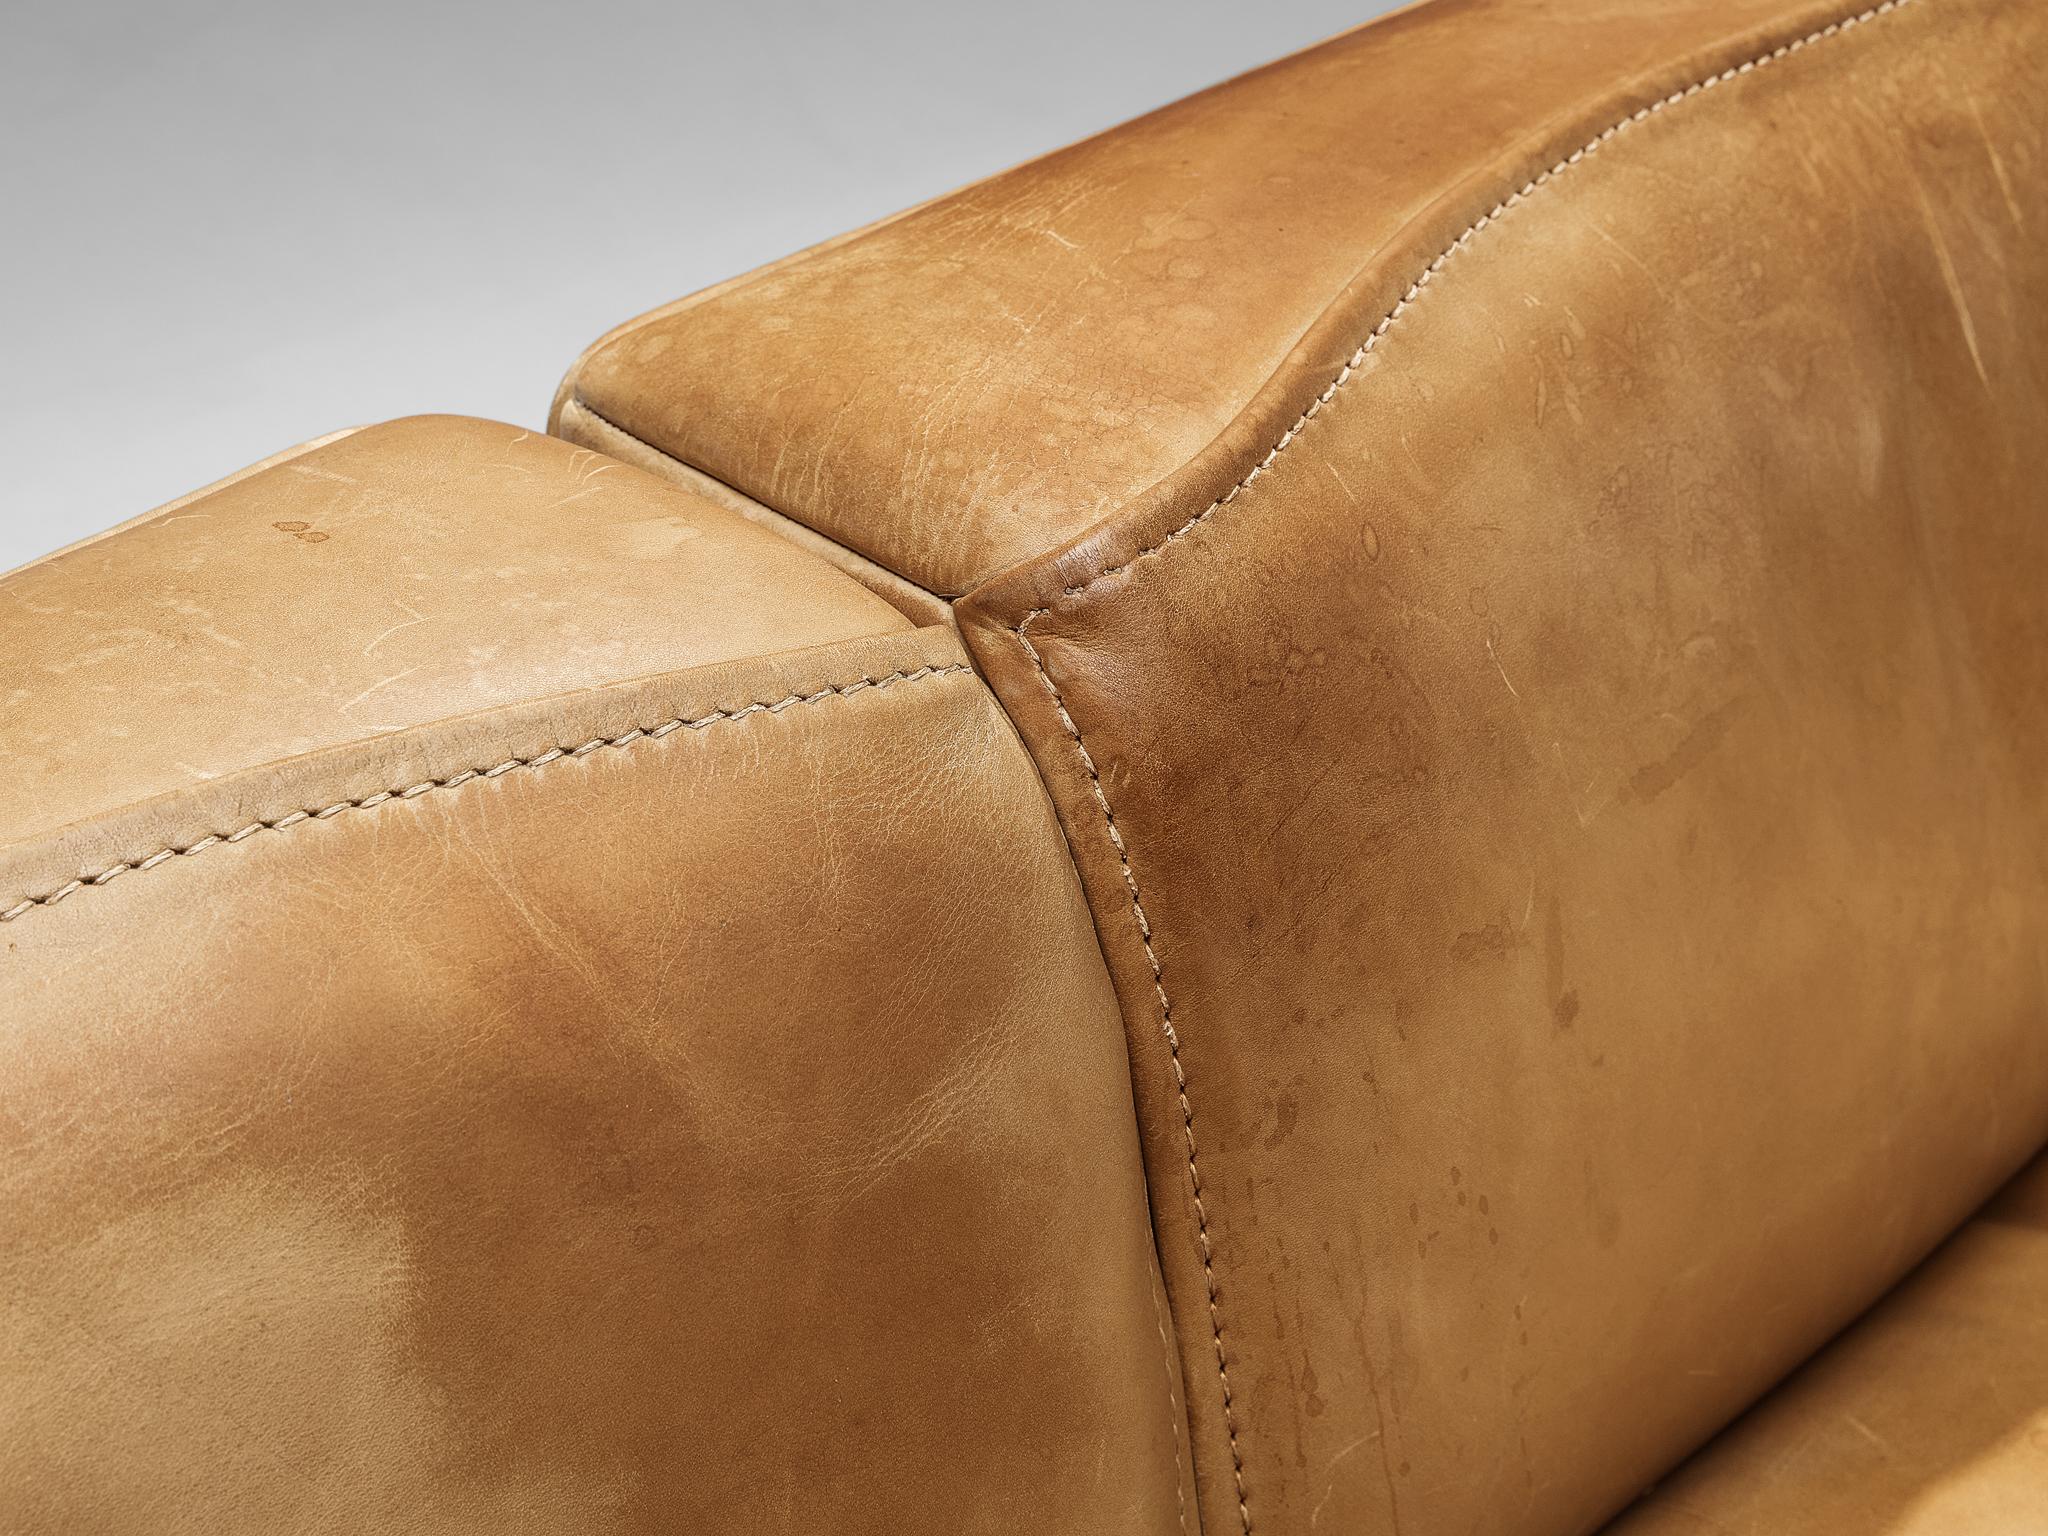 Swiss De Sede ‘DS-15’ Modular Sofa in Patinated Cognac Leather